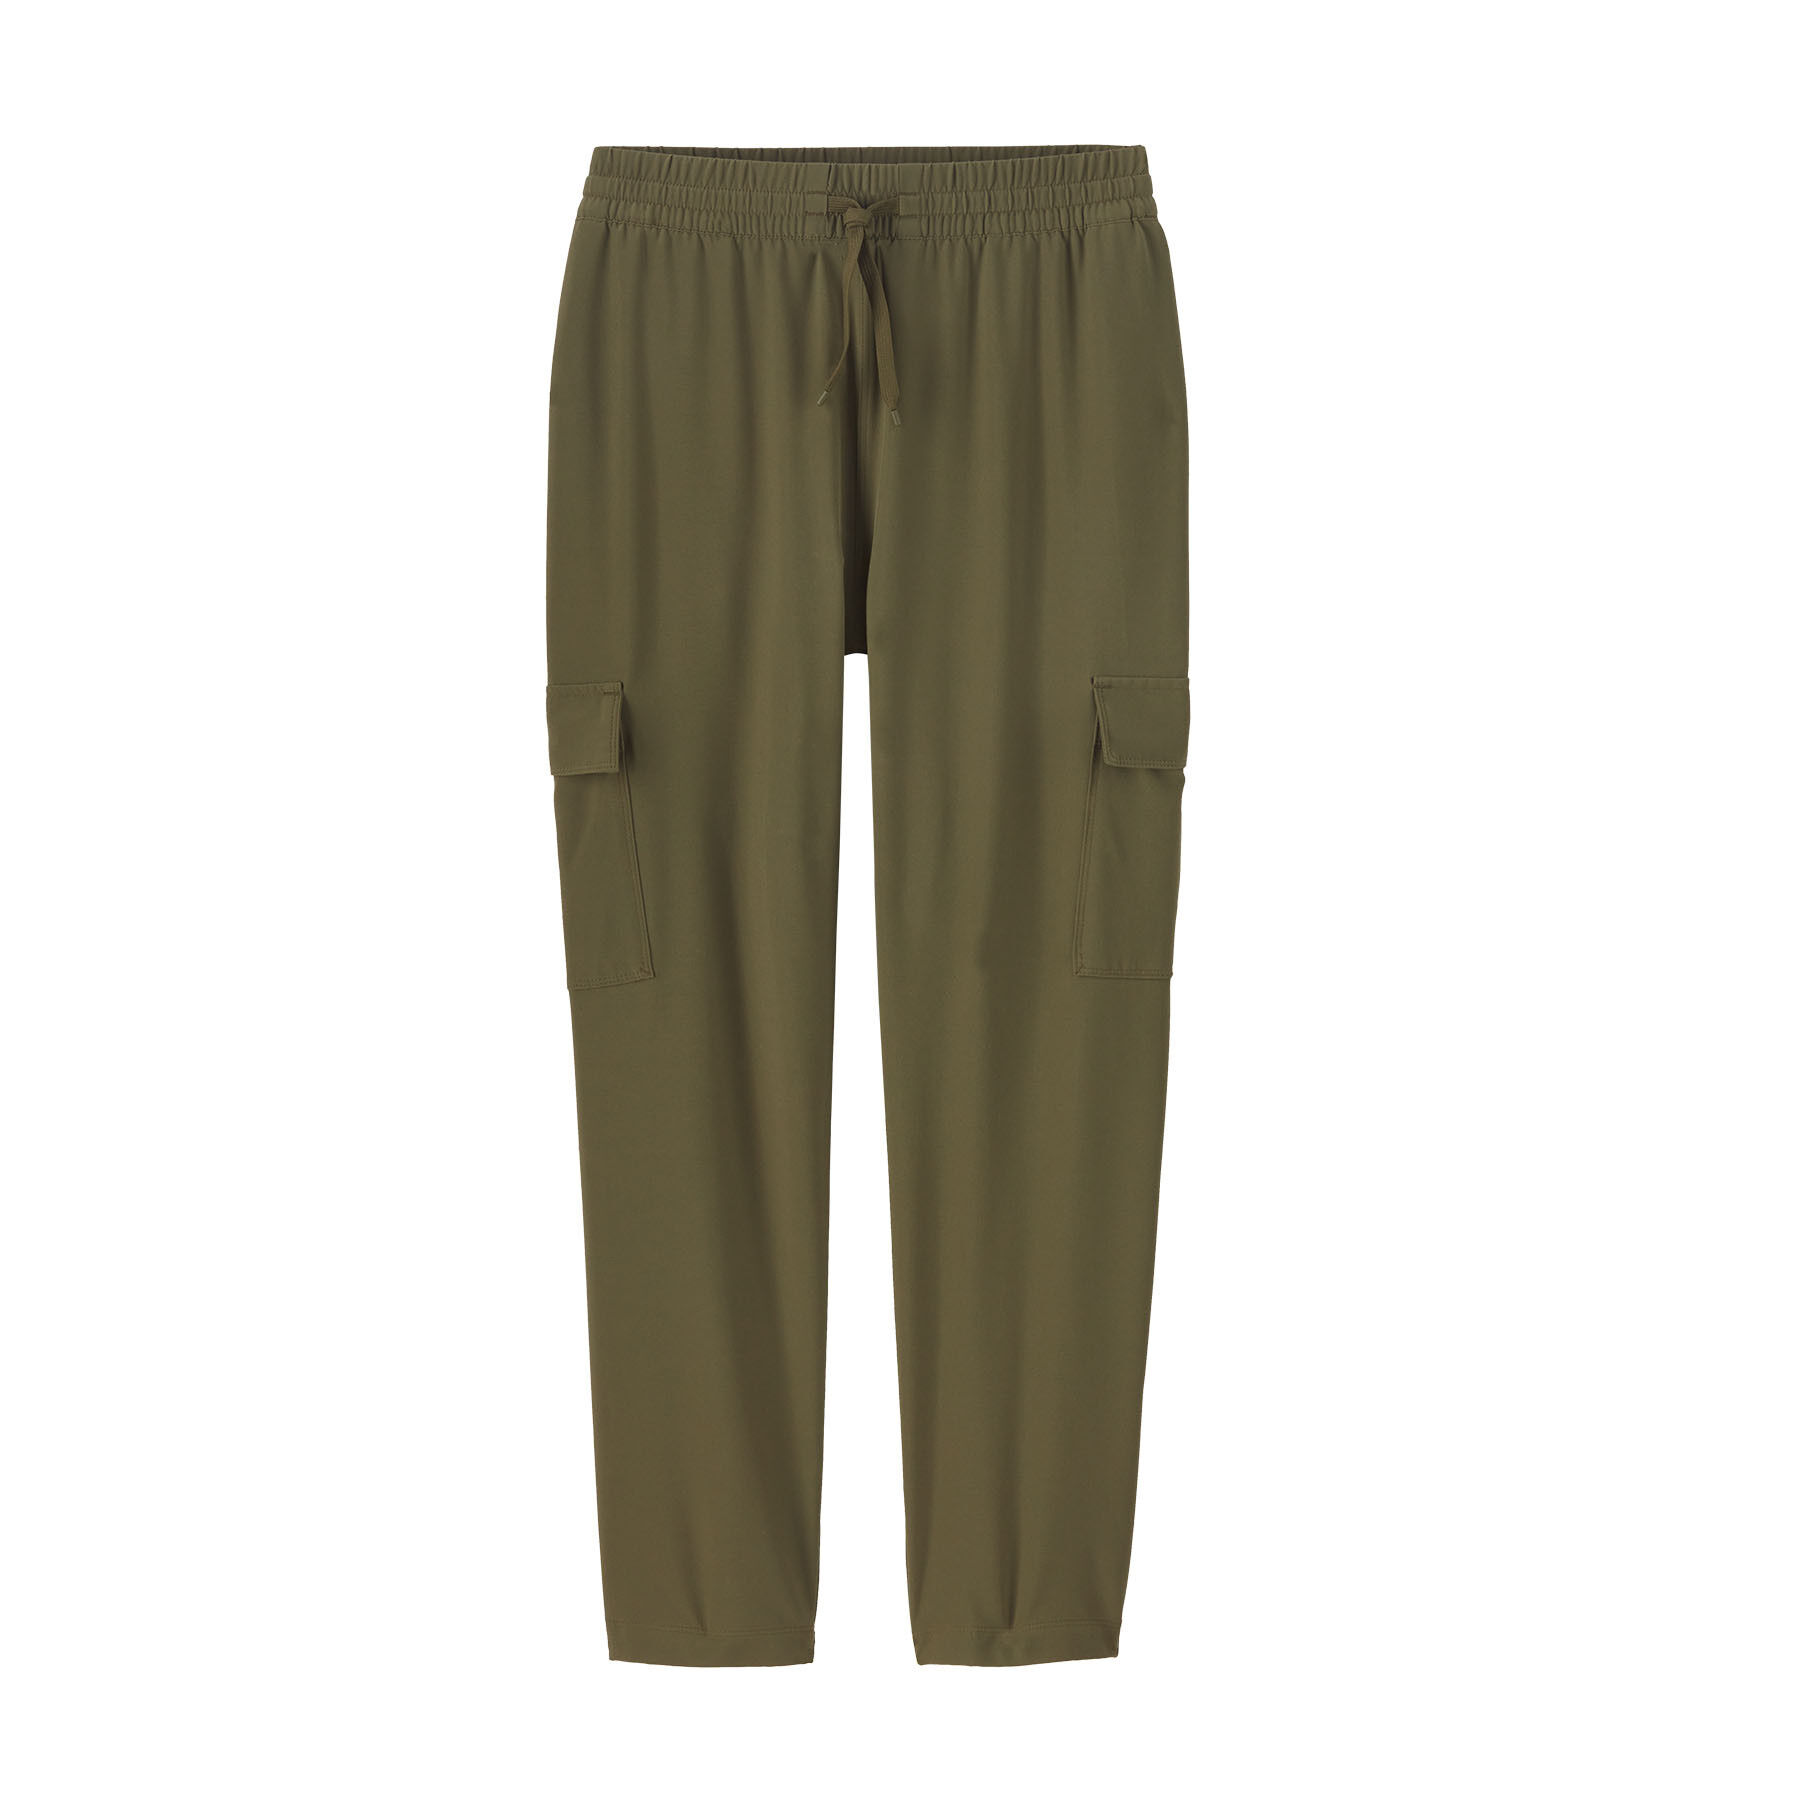 Patagonia Fleetwith Pants - Walking trousers - Women's